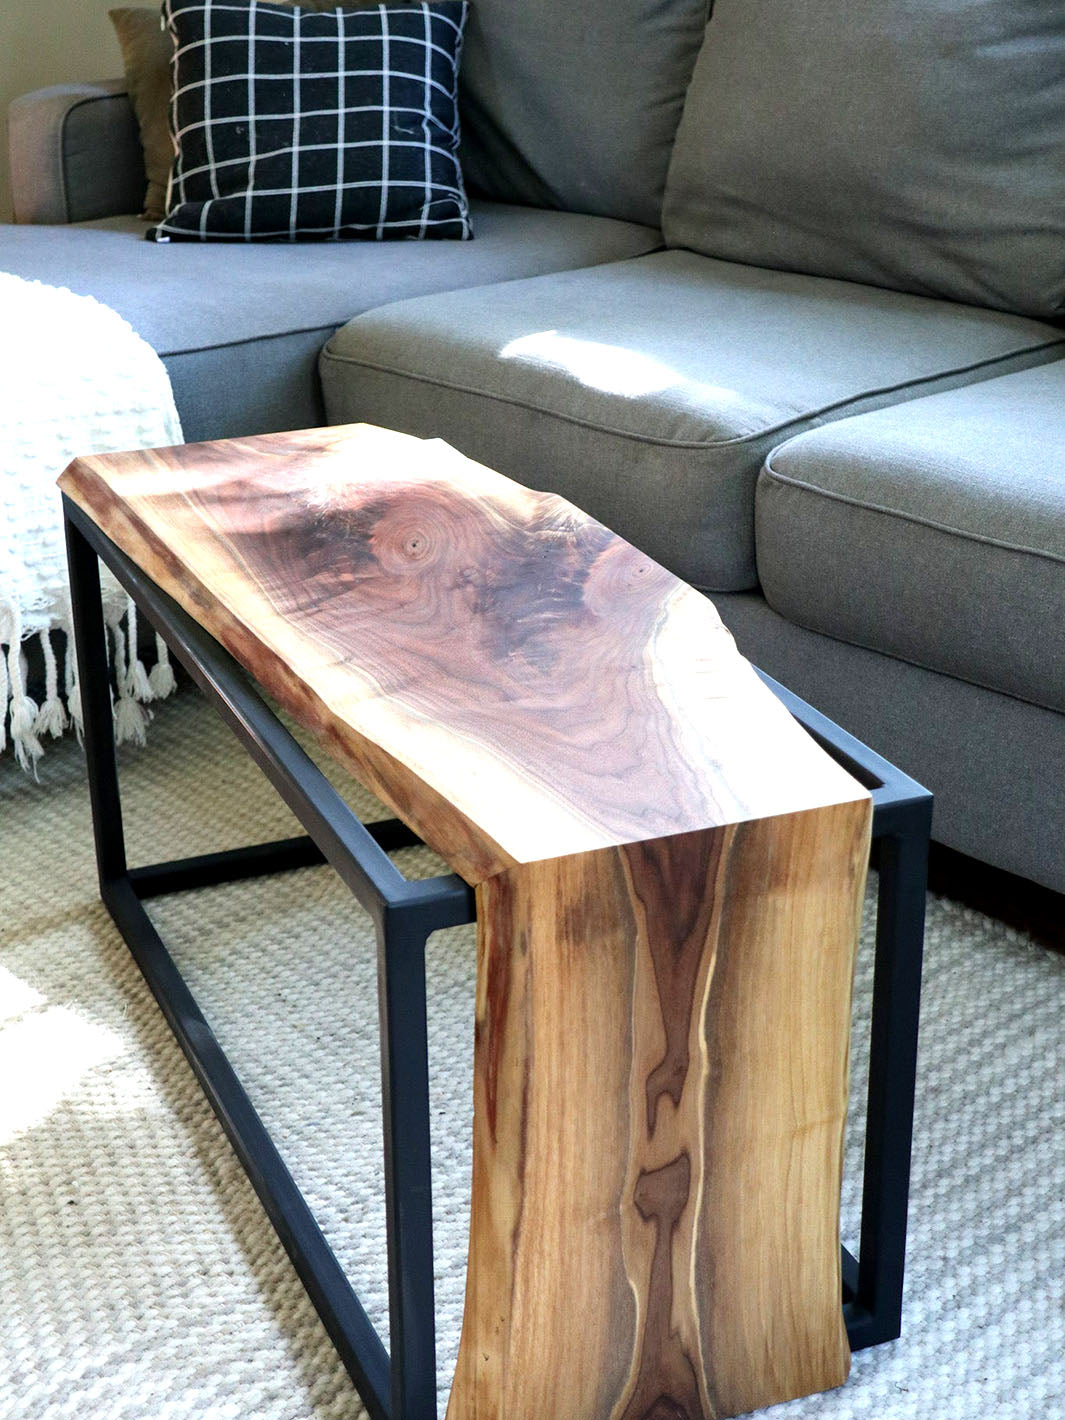 Live-Edge Walnut Waterfall Bench Coffee Table Earthly Comfort Coffee Tables 1654-9